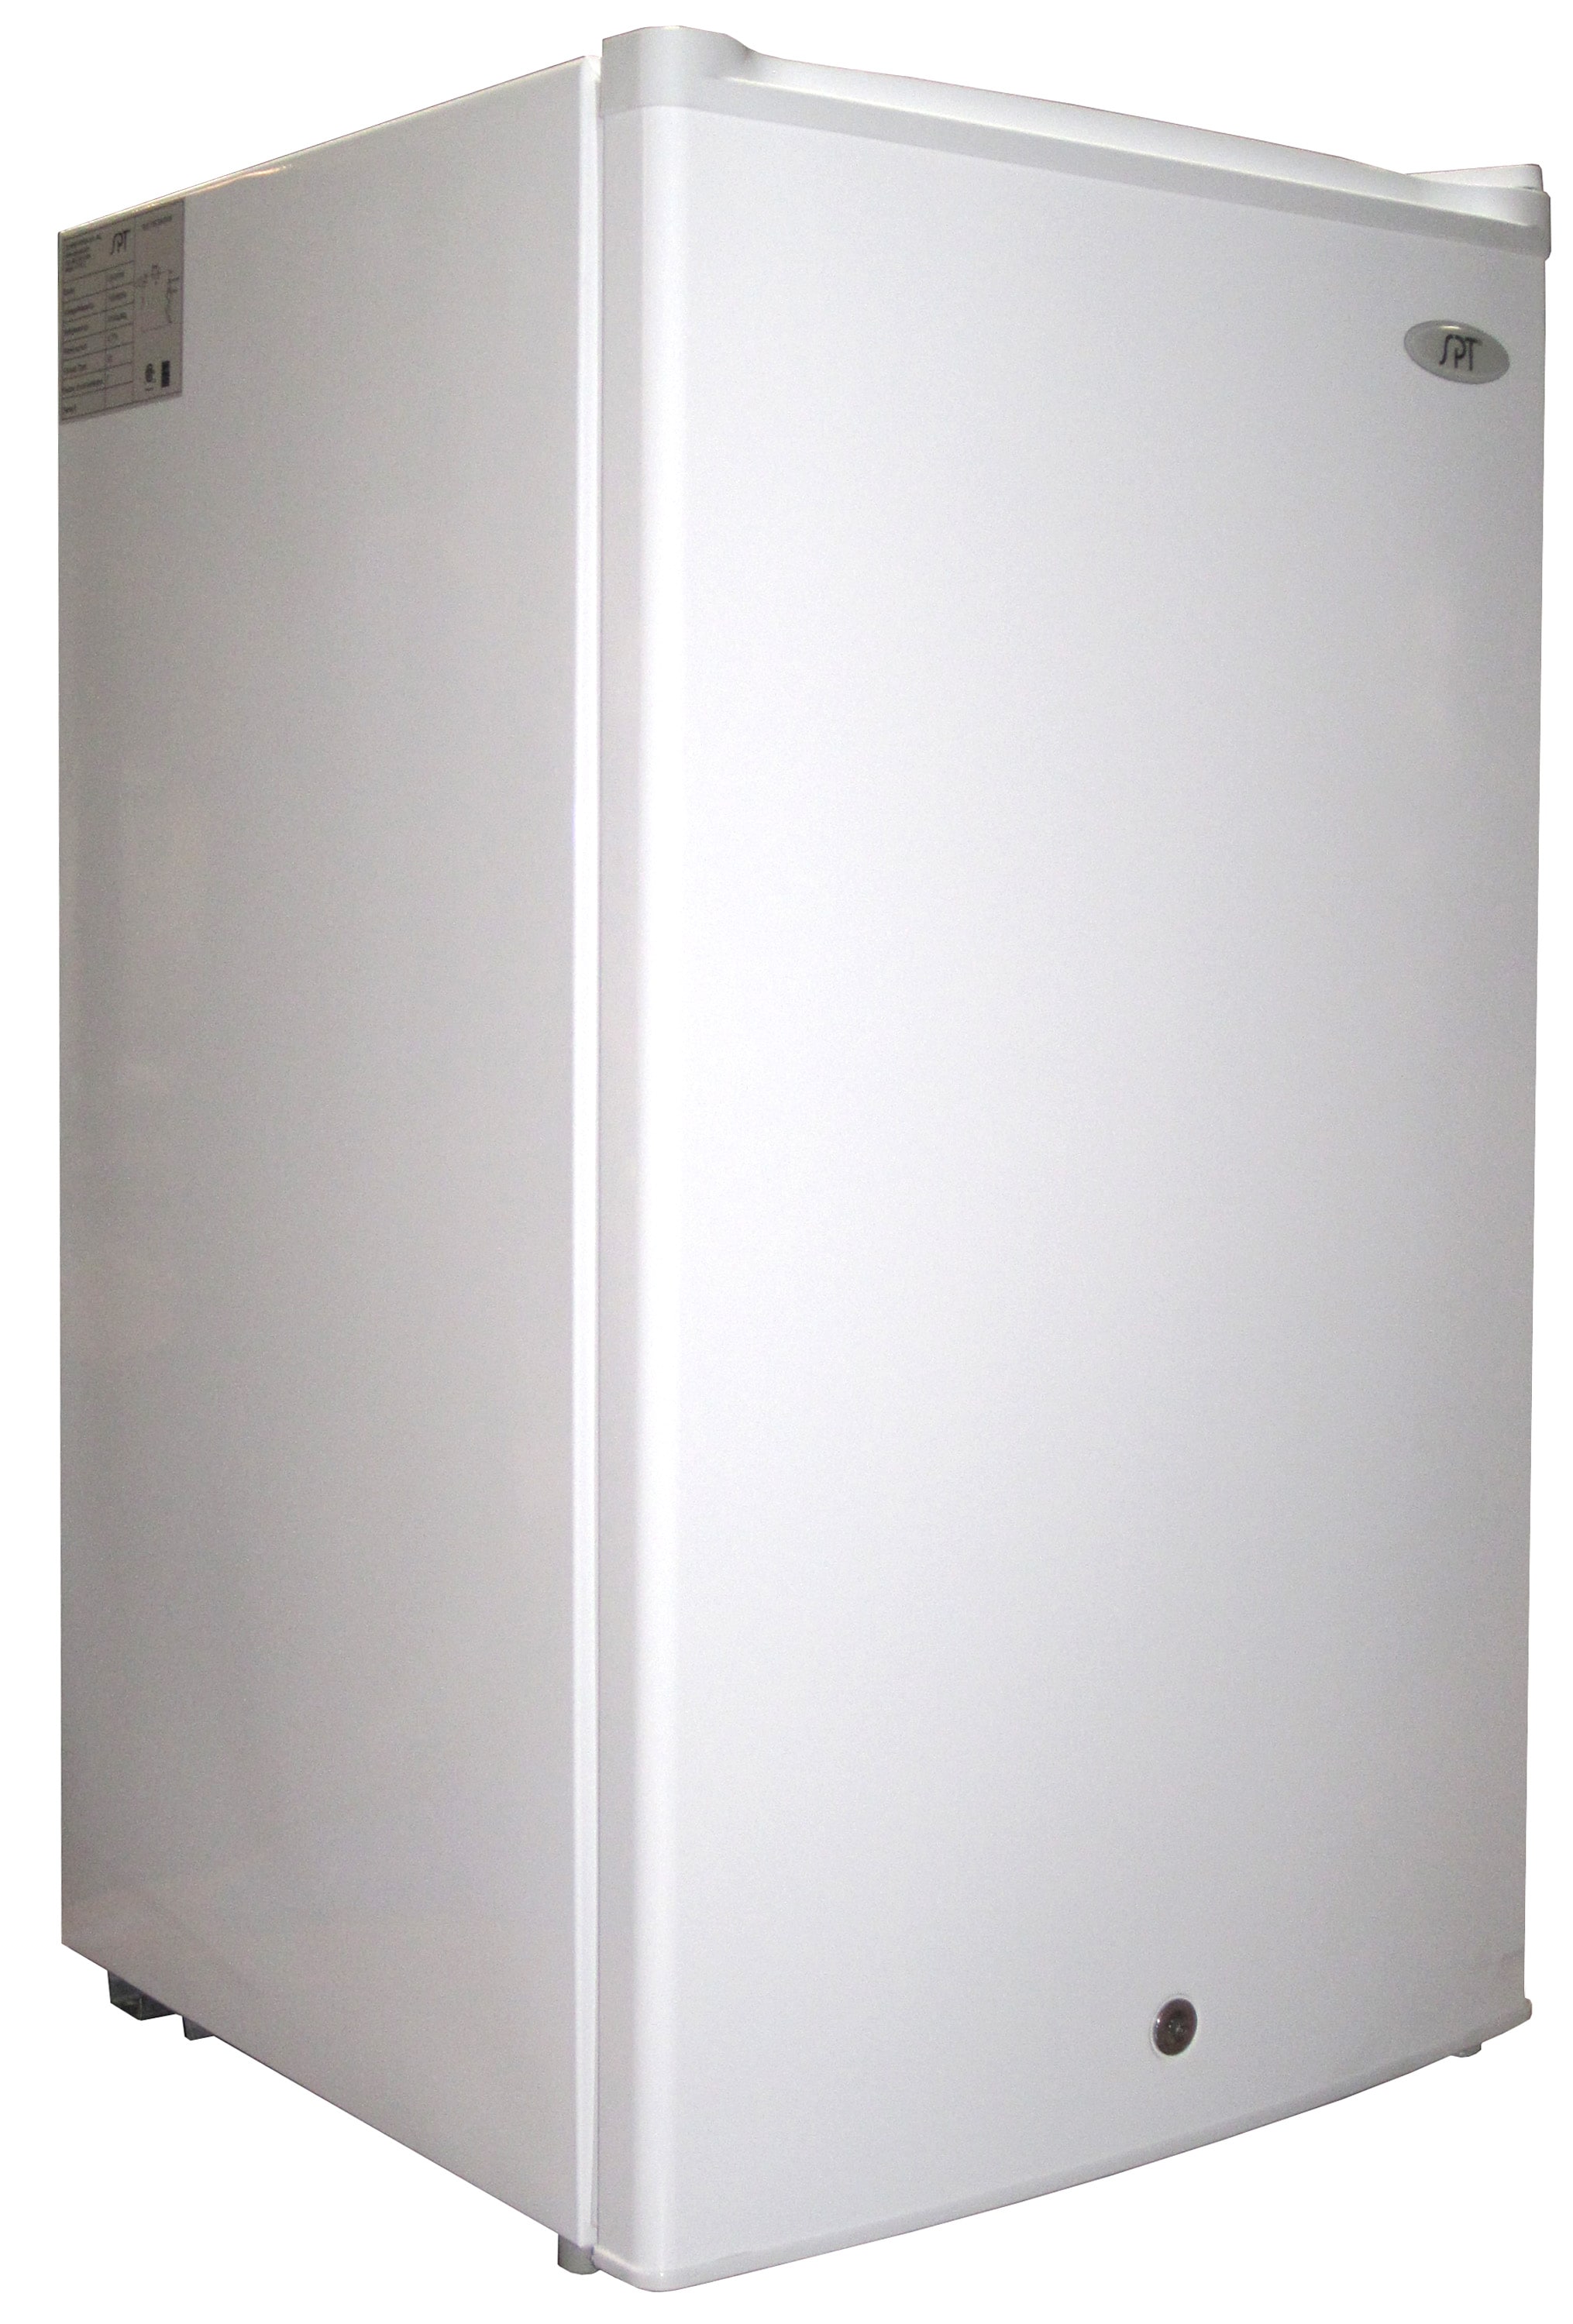 SPT UF-304WA 3.0 Cu.Ft. Upright Freezer in White – Energy Star